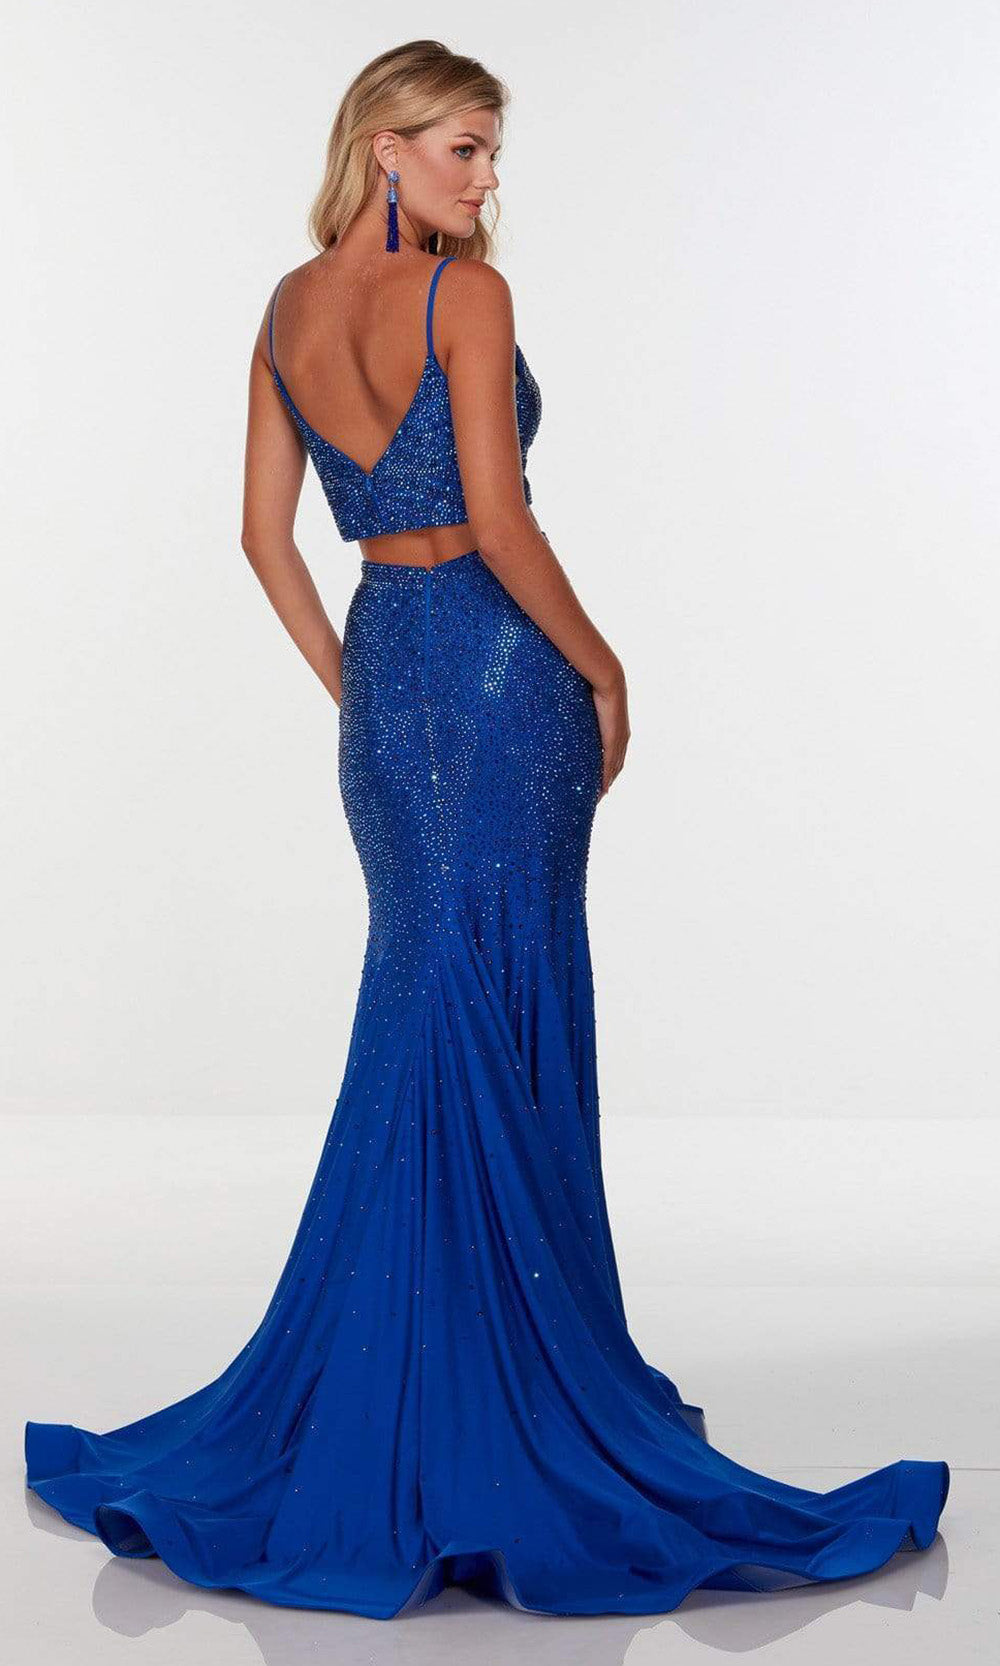 Alyce Paris - 61188 Two Piece Sleeveless Mermaid Gown In Blue